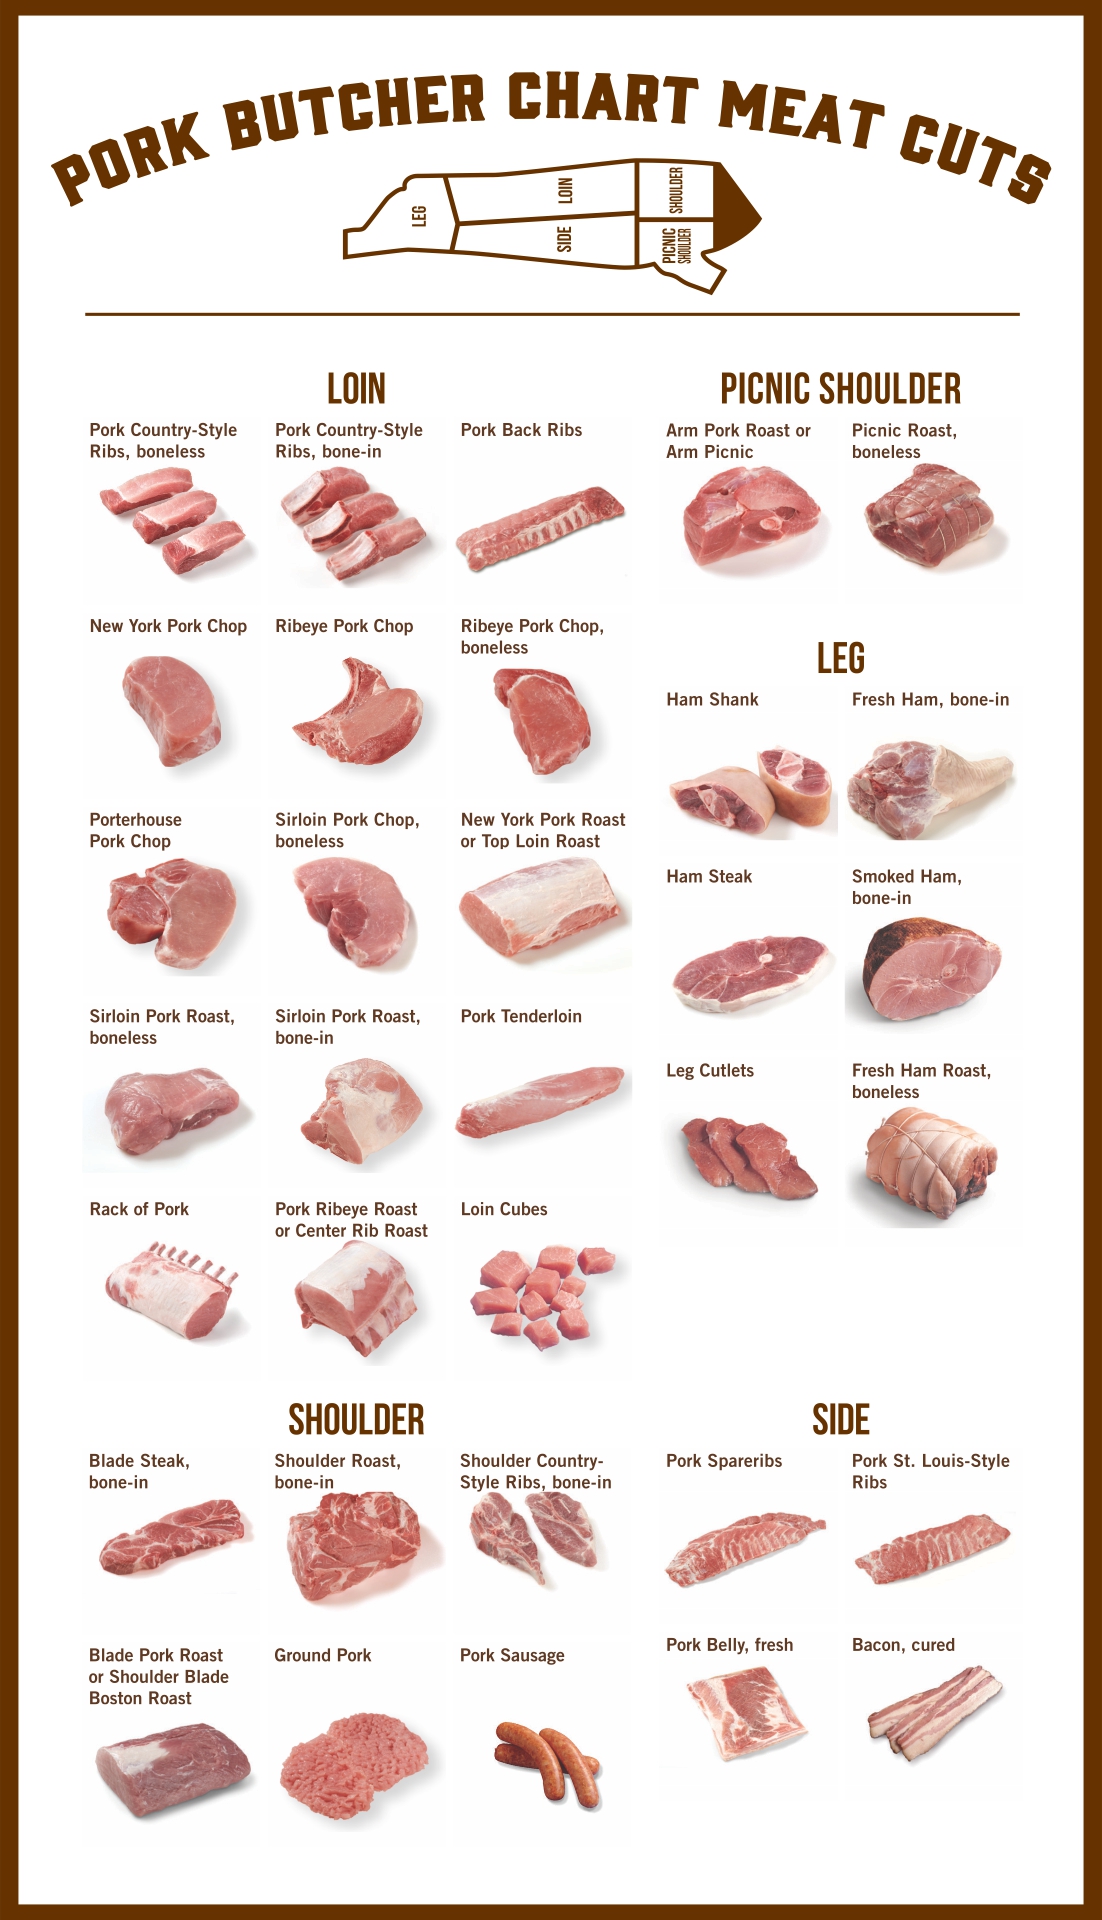 Pork Butcher Chart Meat Cuts